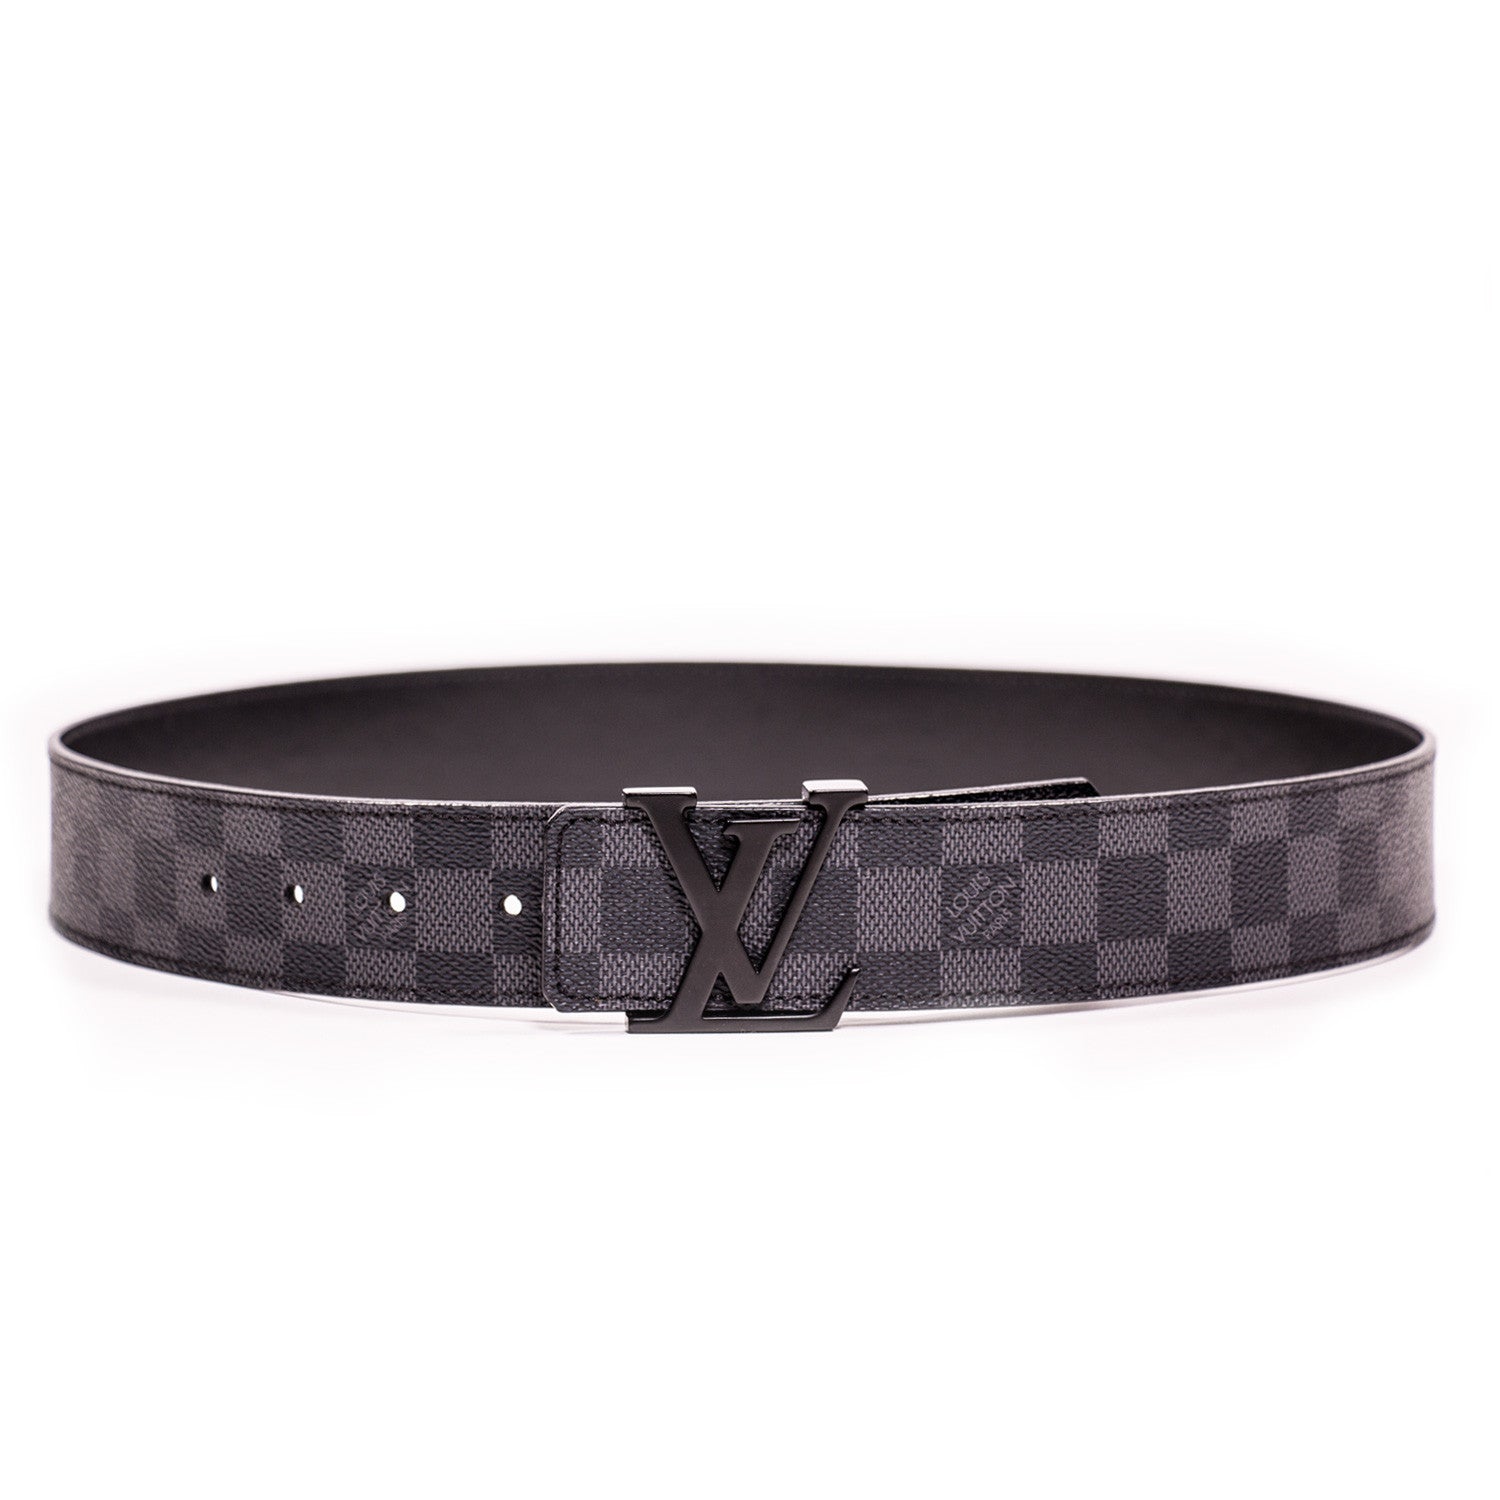 Shop authentic Louis Vuitton Initiales Belt at revogue for just